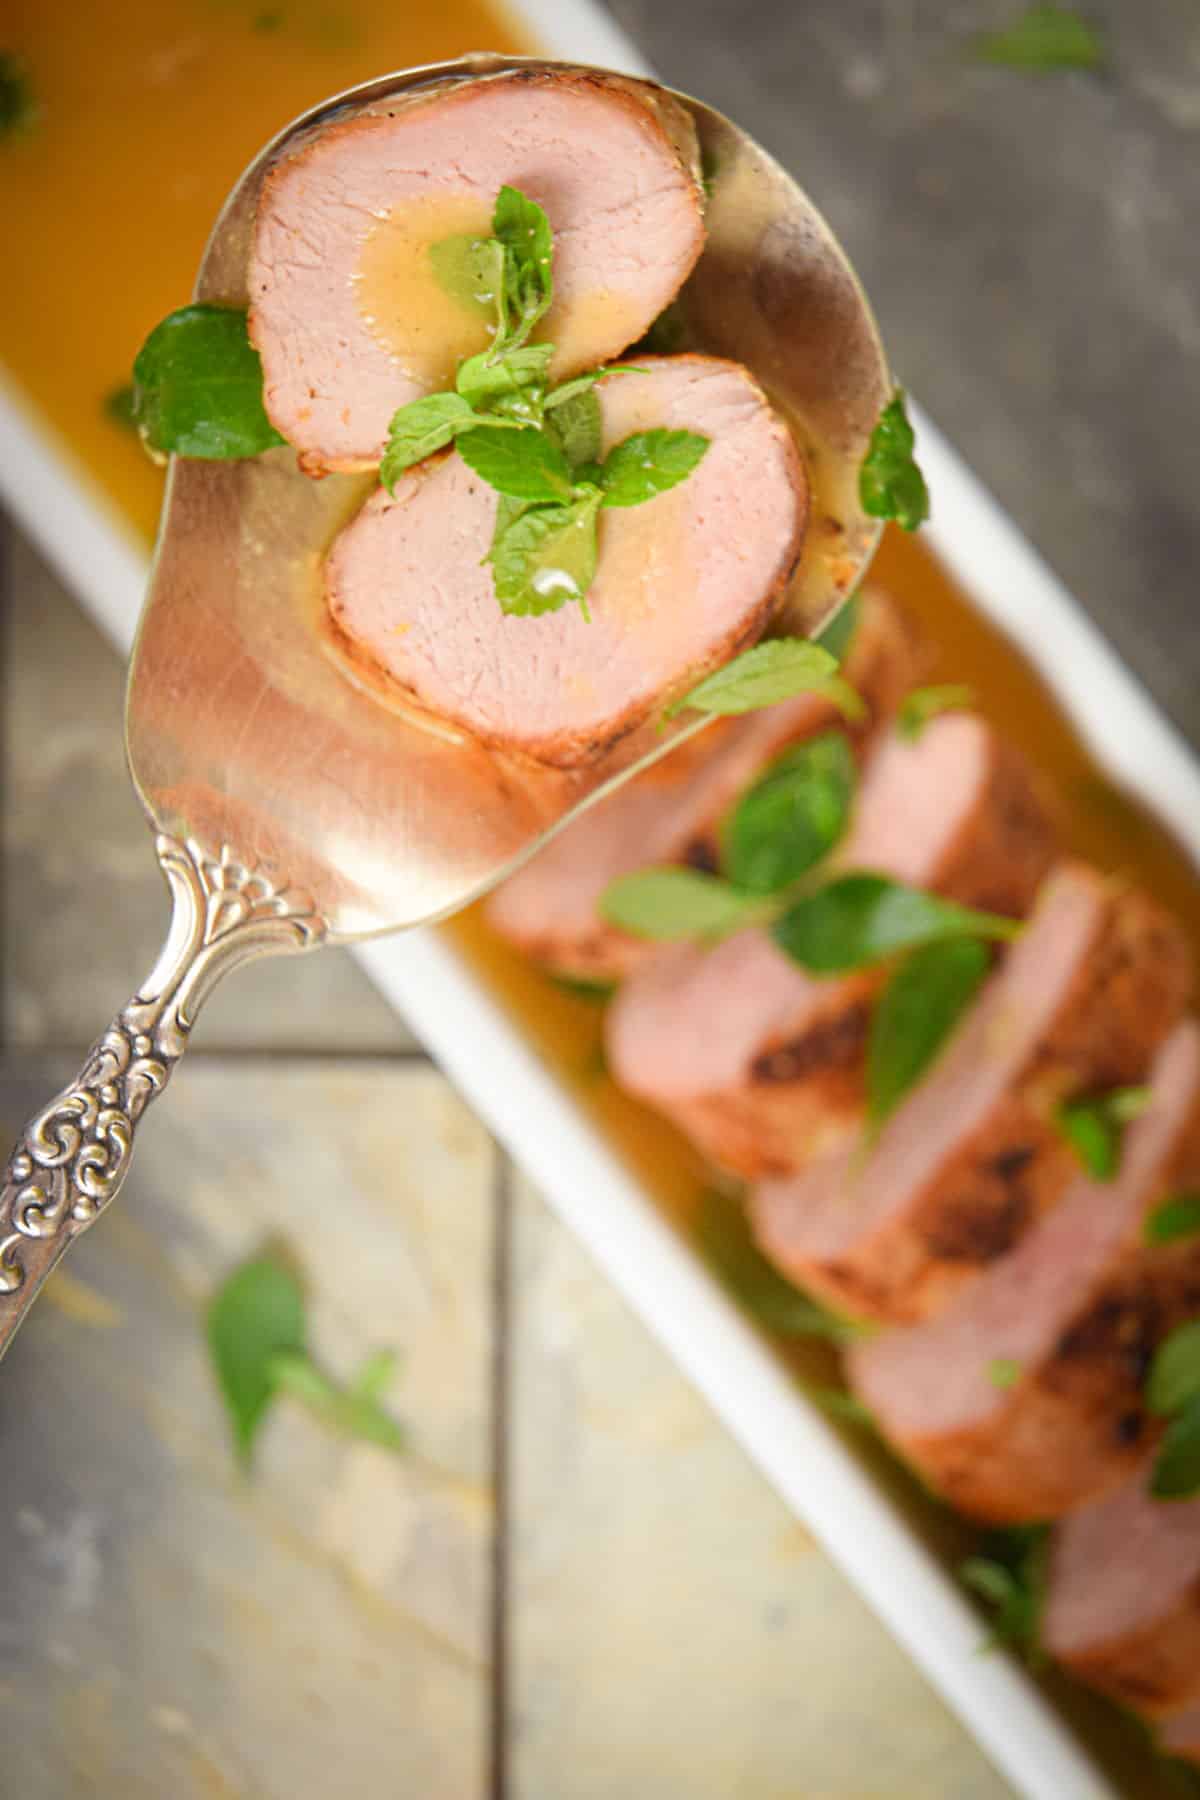 Sliced pork tenderloin in spoon with wine sauce.